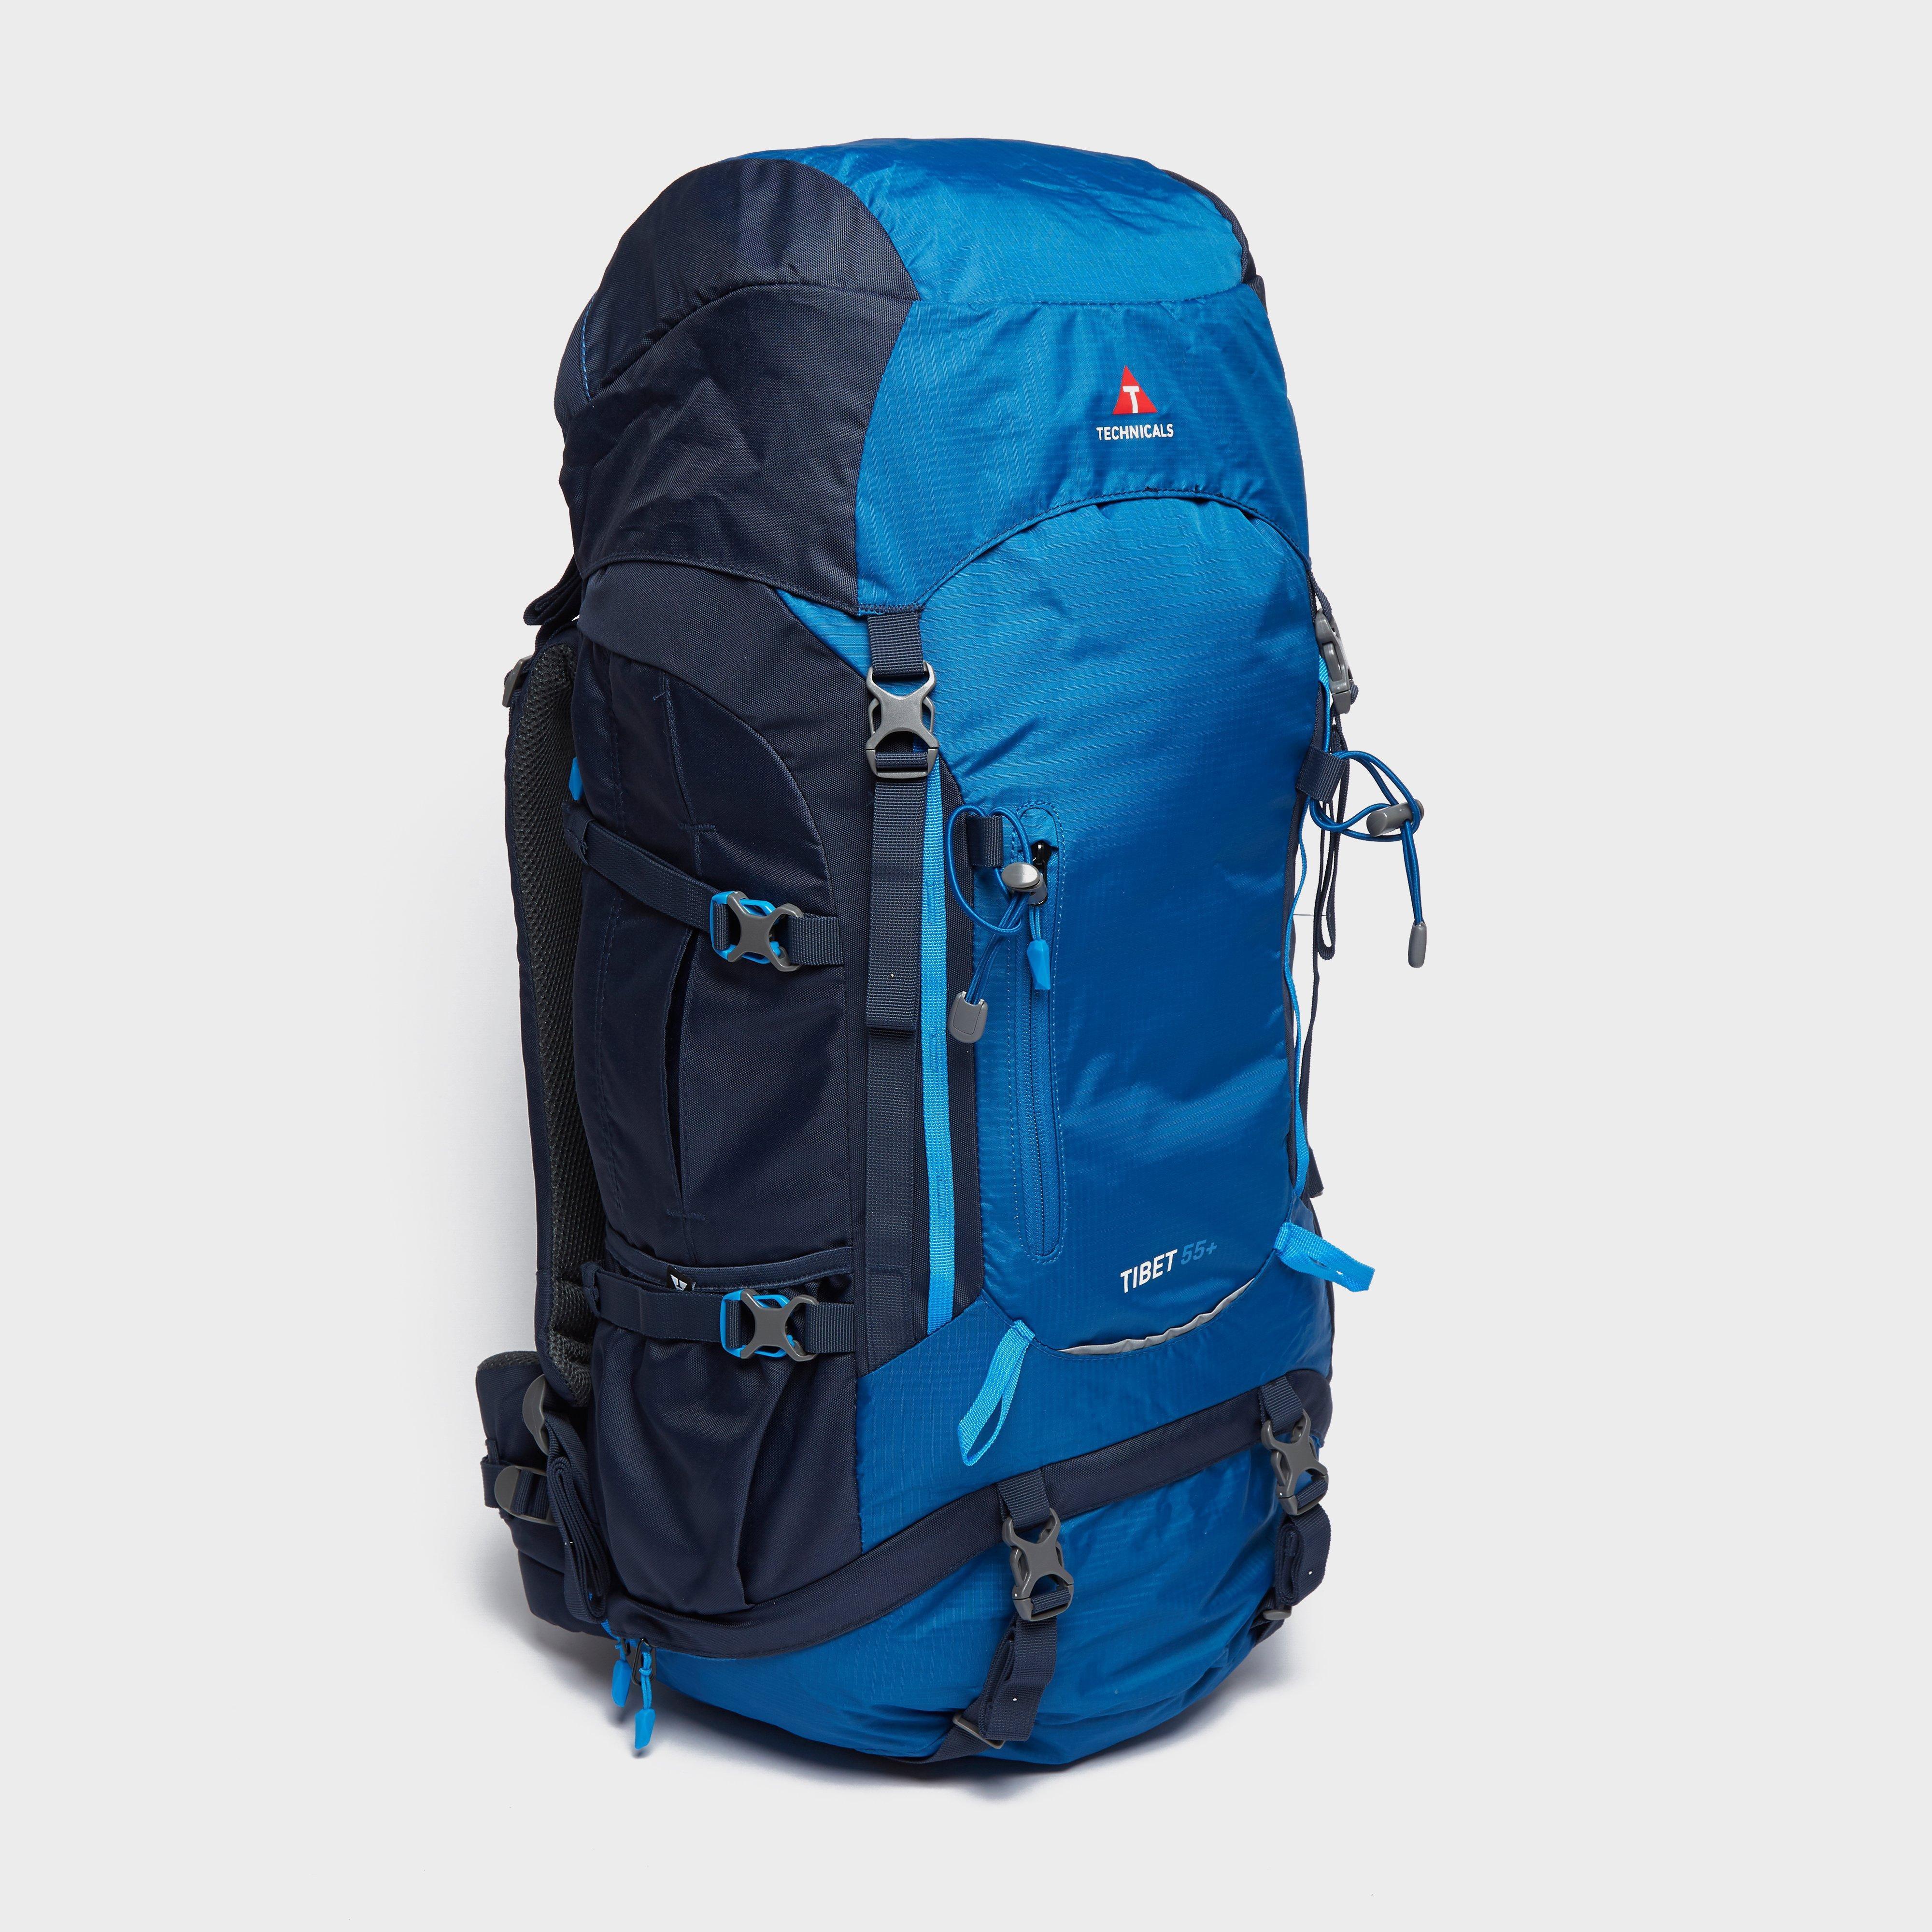  Technicals Tibet 55 Backpack, Blue